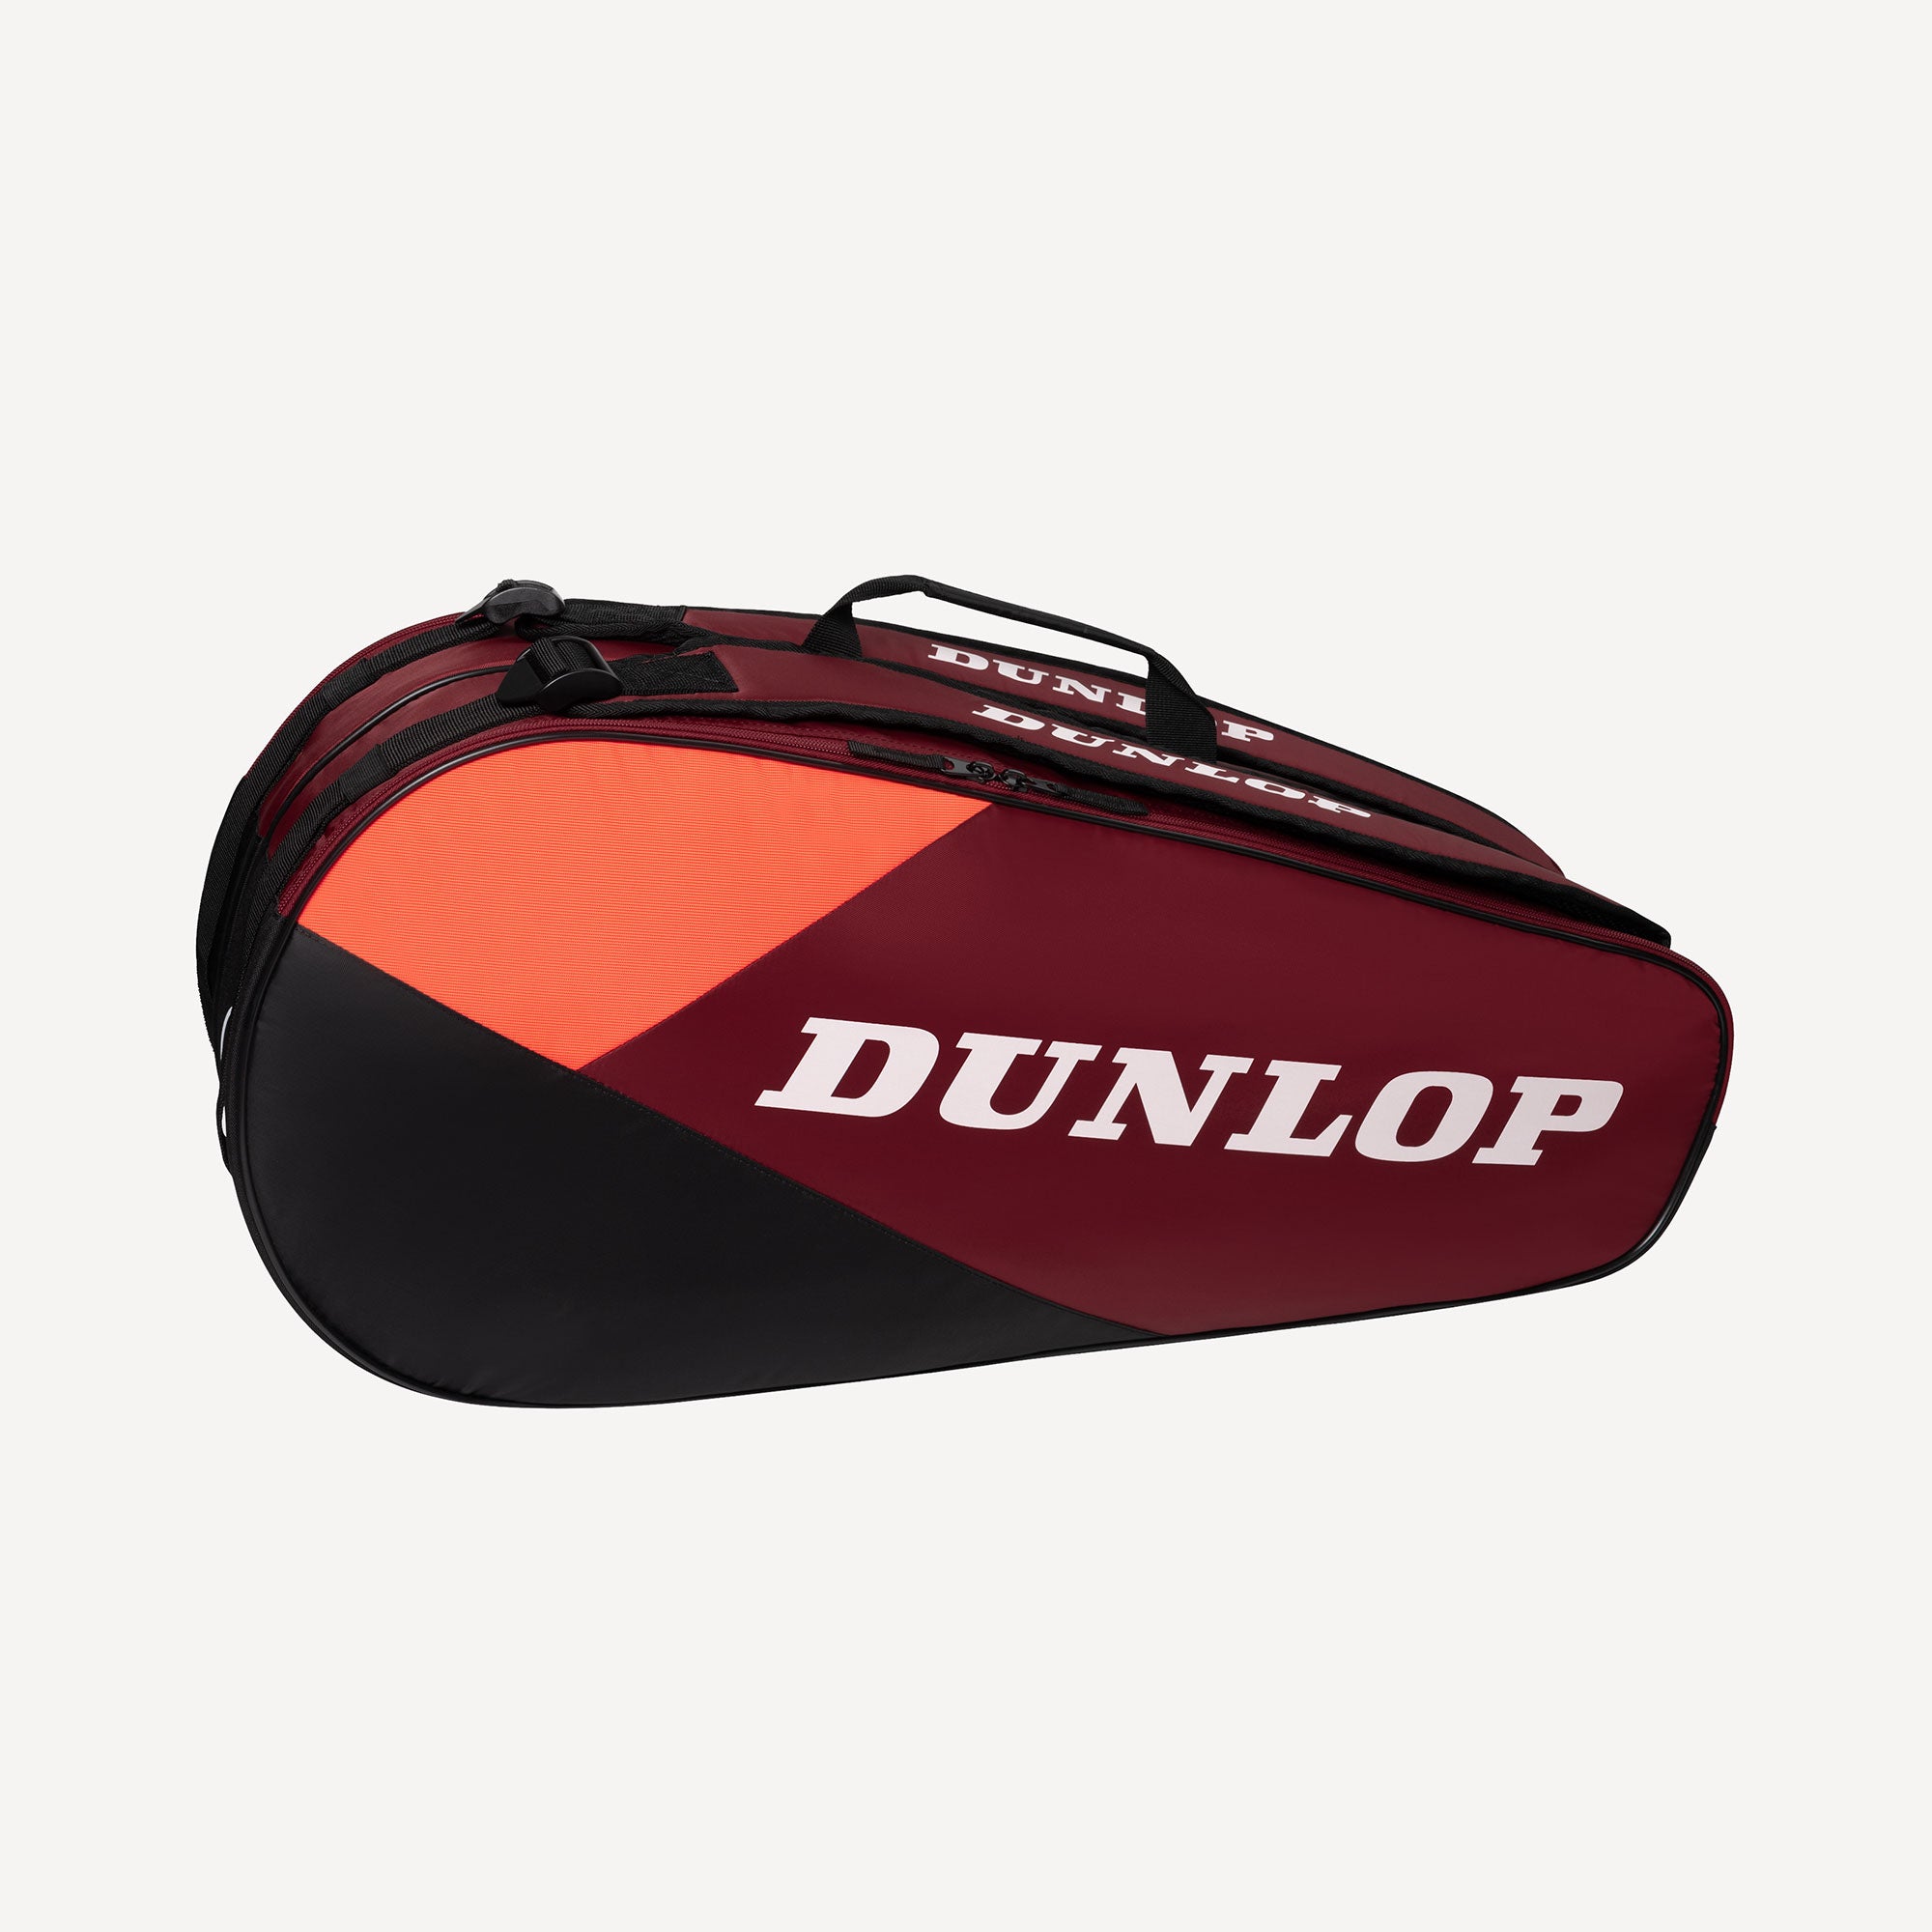 Dunlop CX Club 6 Racket Tennis Bag - Red (1)